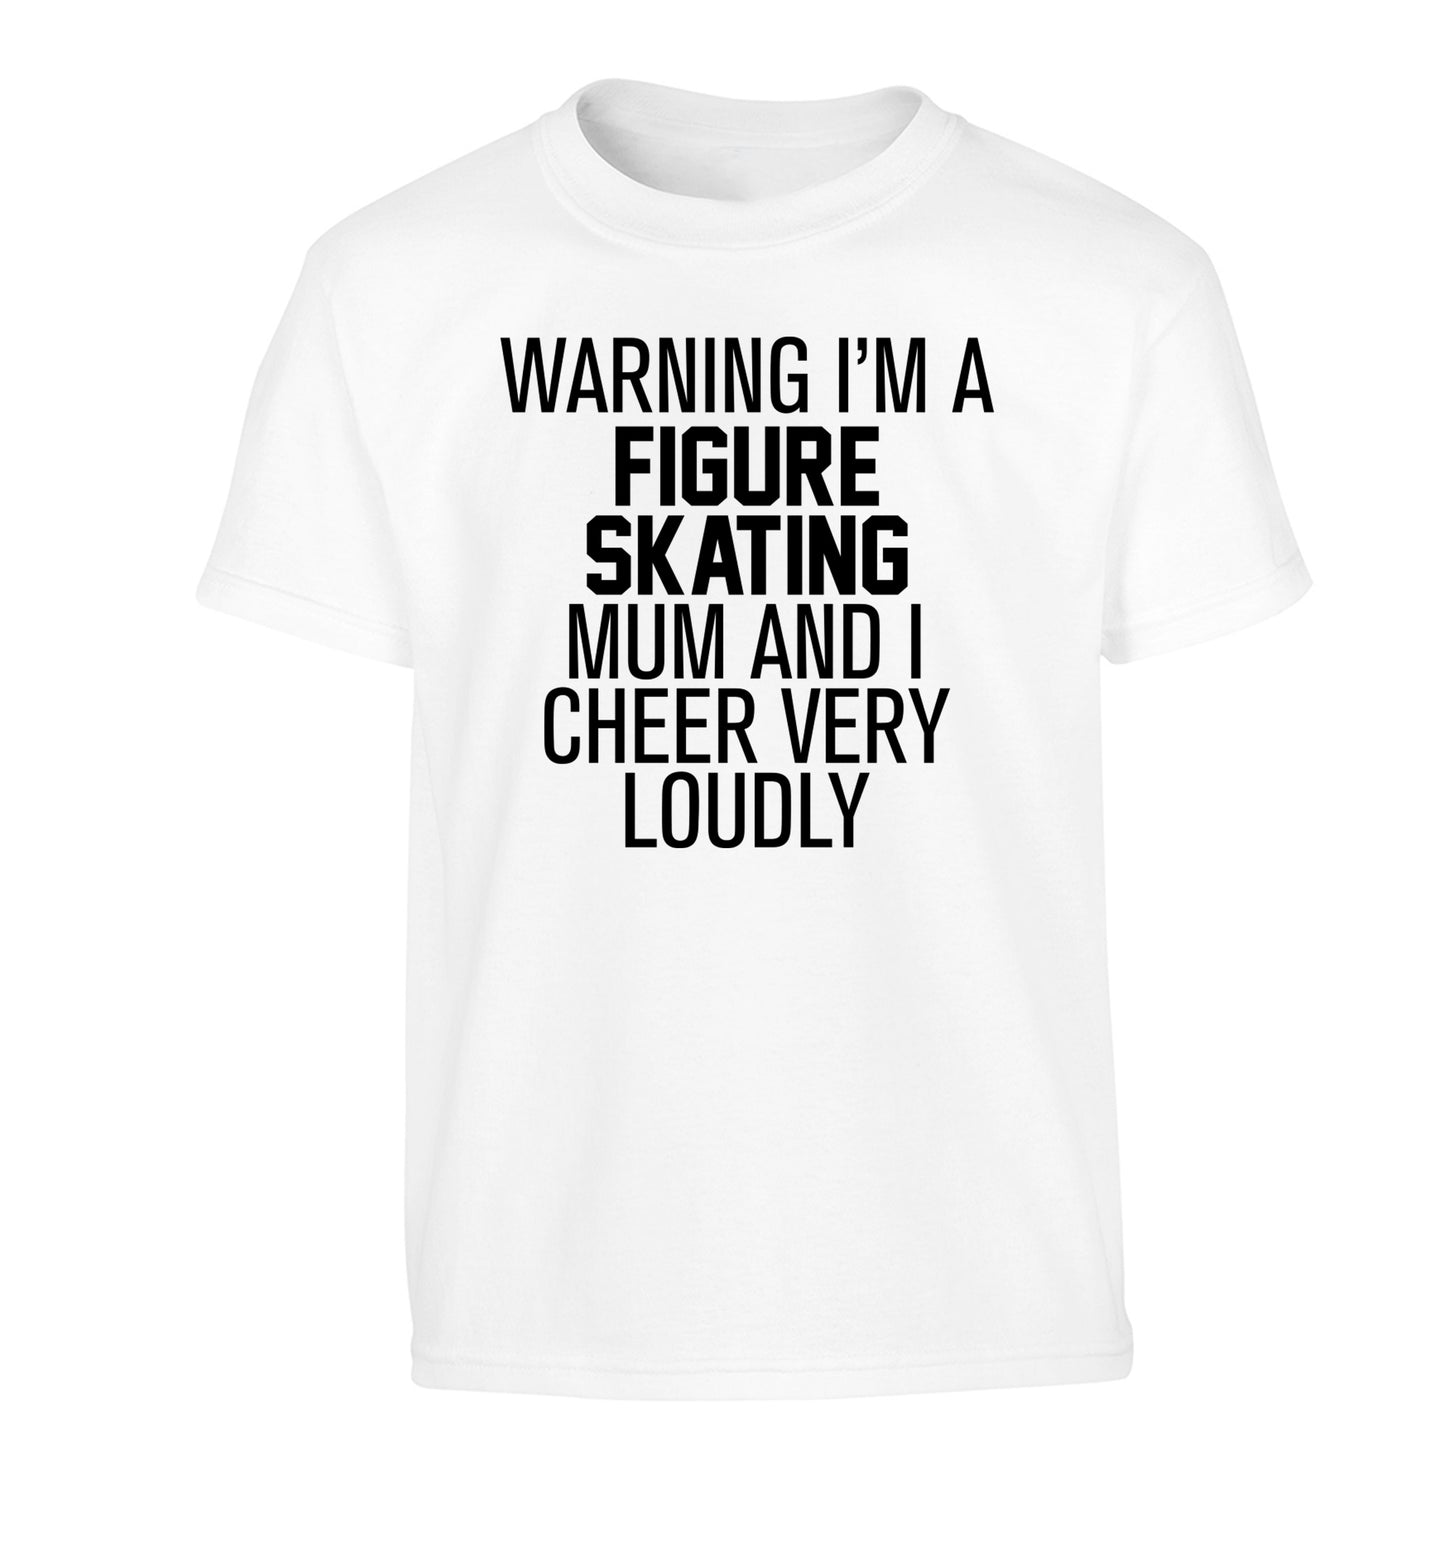 Warning I'm a figure skating mum and I cheer very loudly Children's white Tshirt 12-14 Years